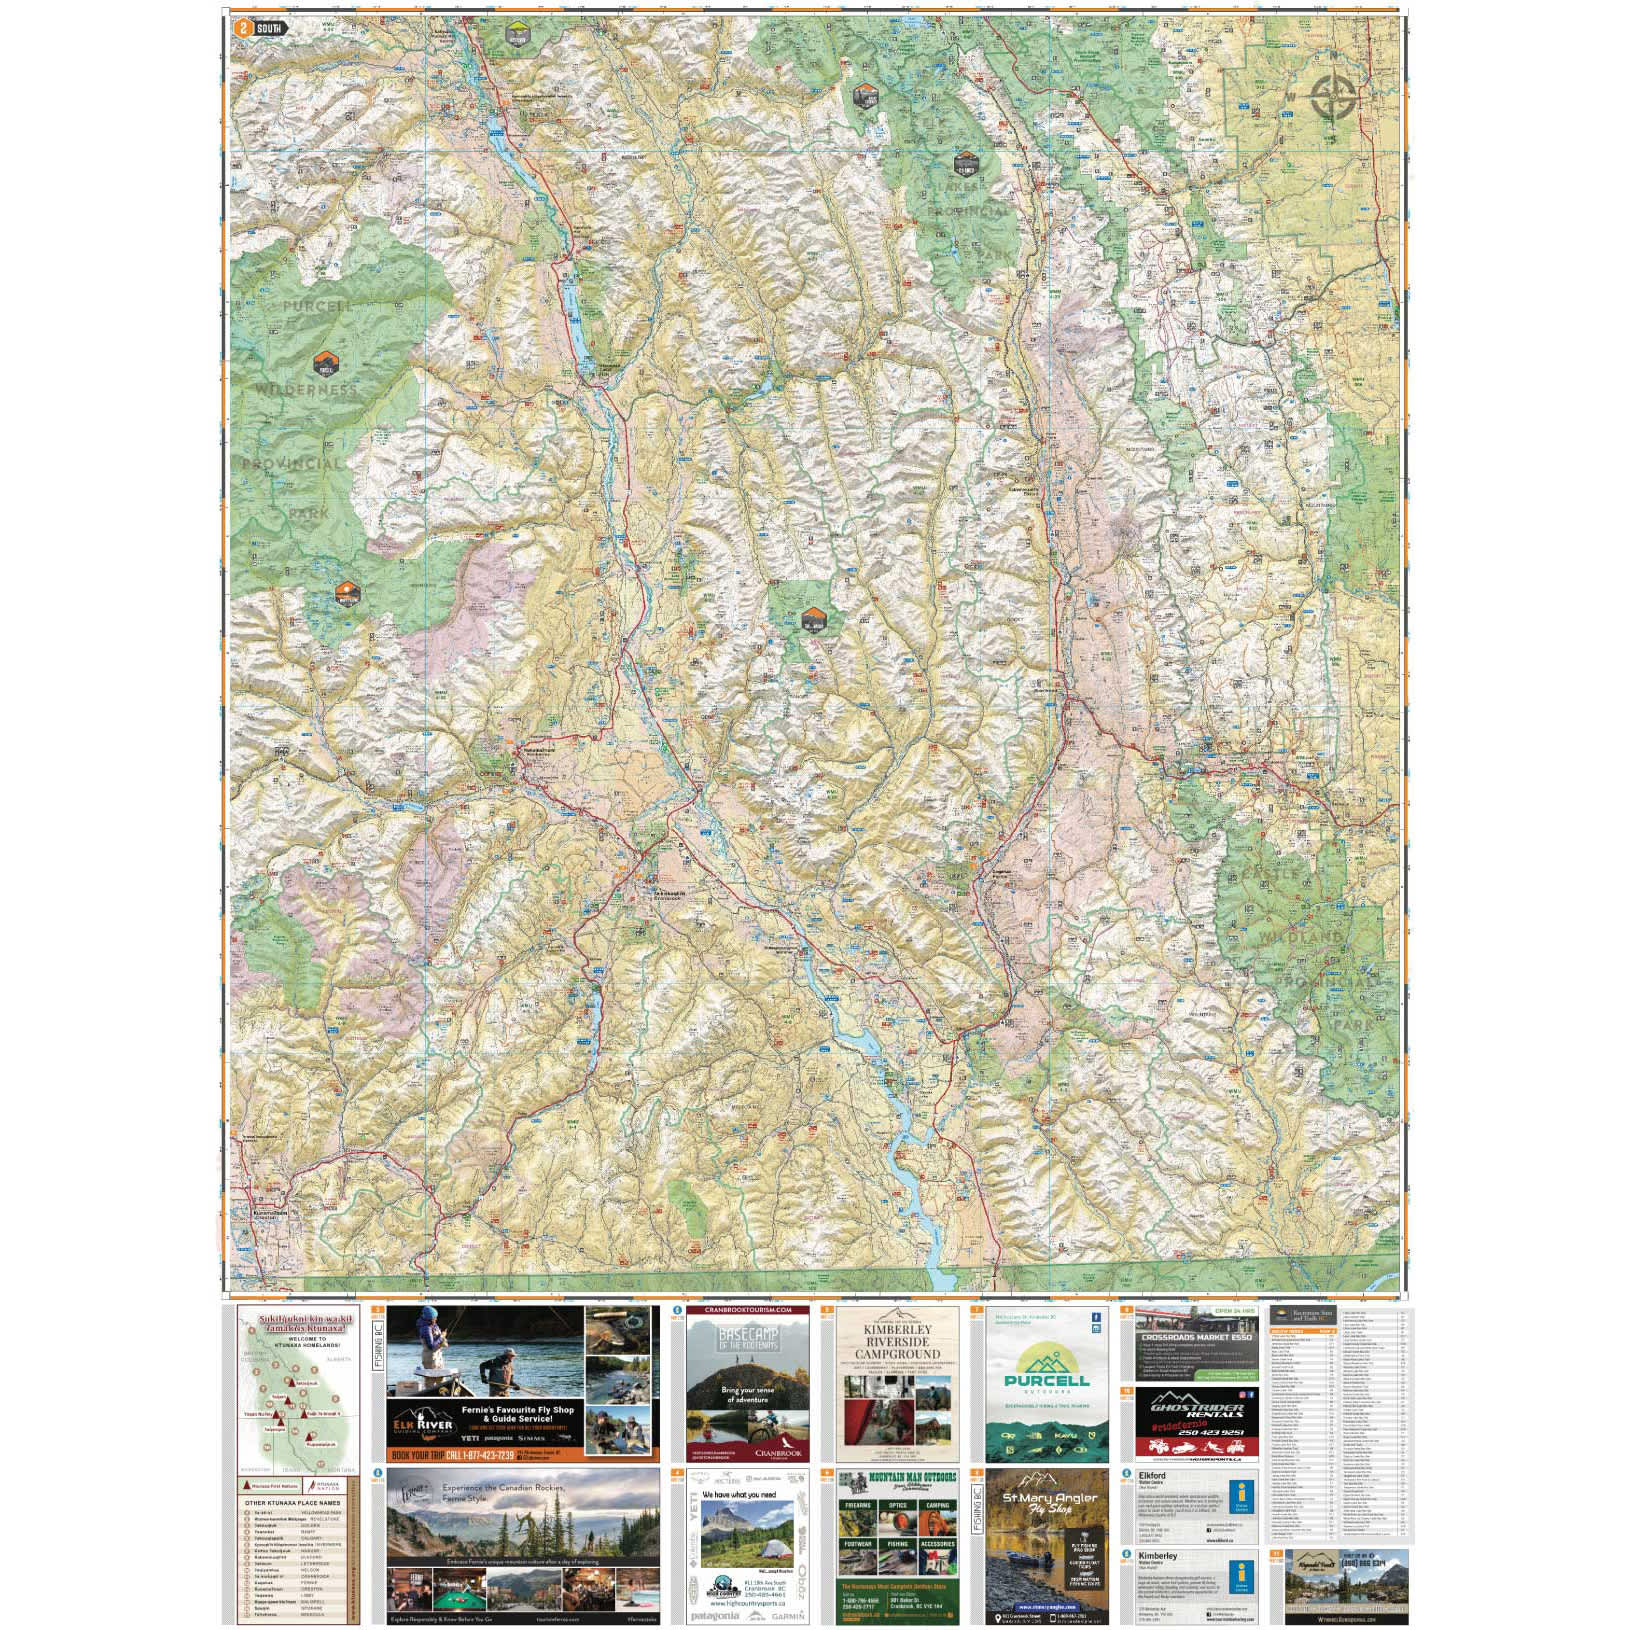 Backroad Mapbooks East Kootenay BC - Waterproof Recreation Map